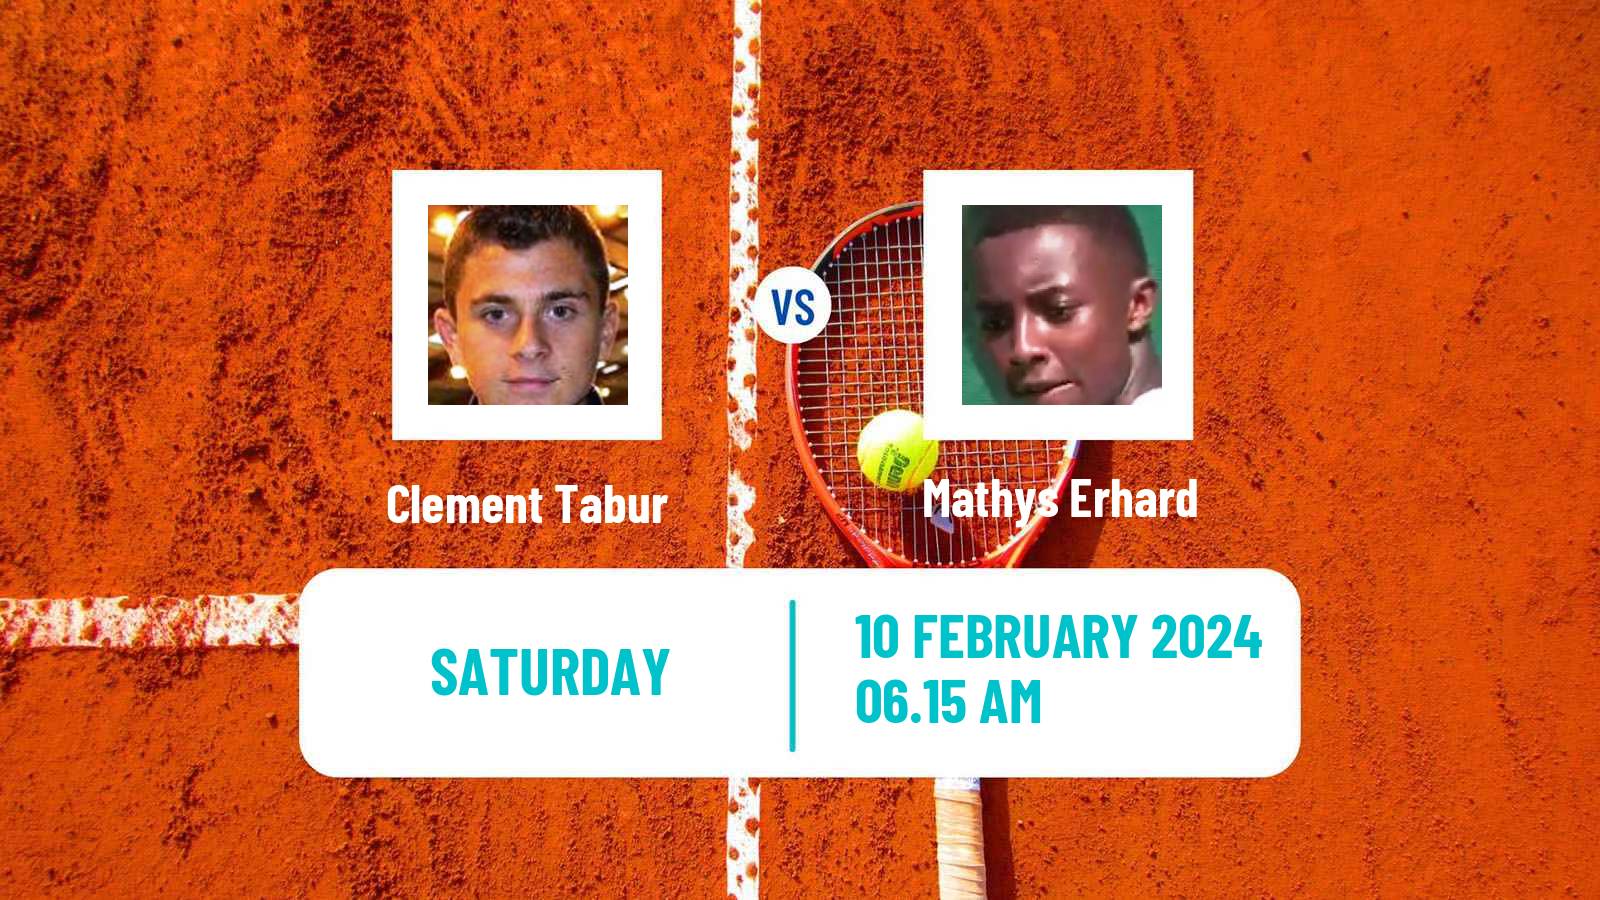 Tennis ITF M25 Antalya 2 Men Clement Tabur - Mathys Erhard